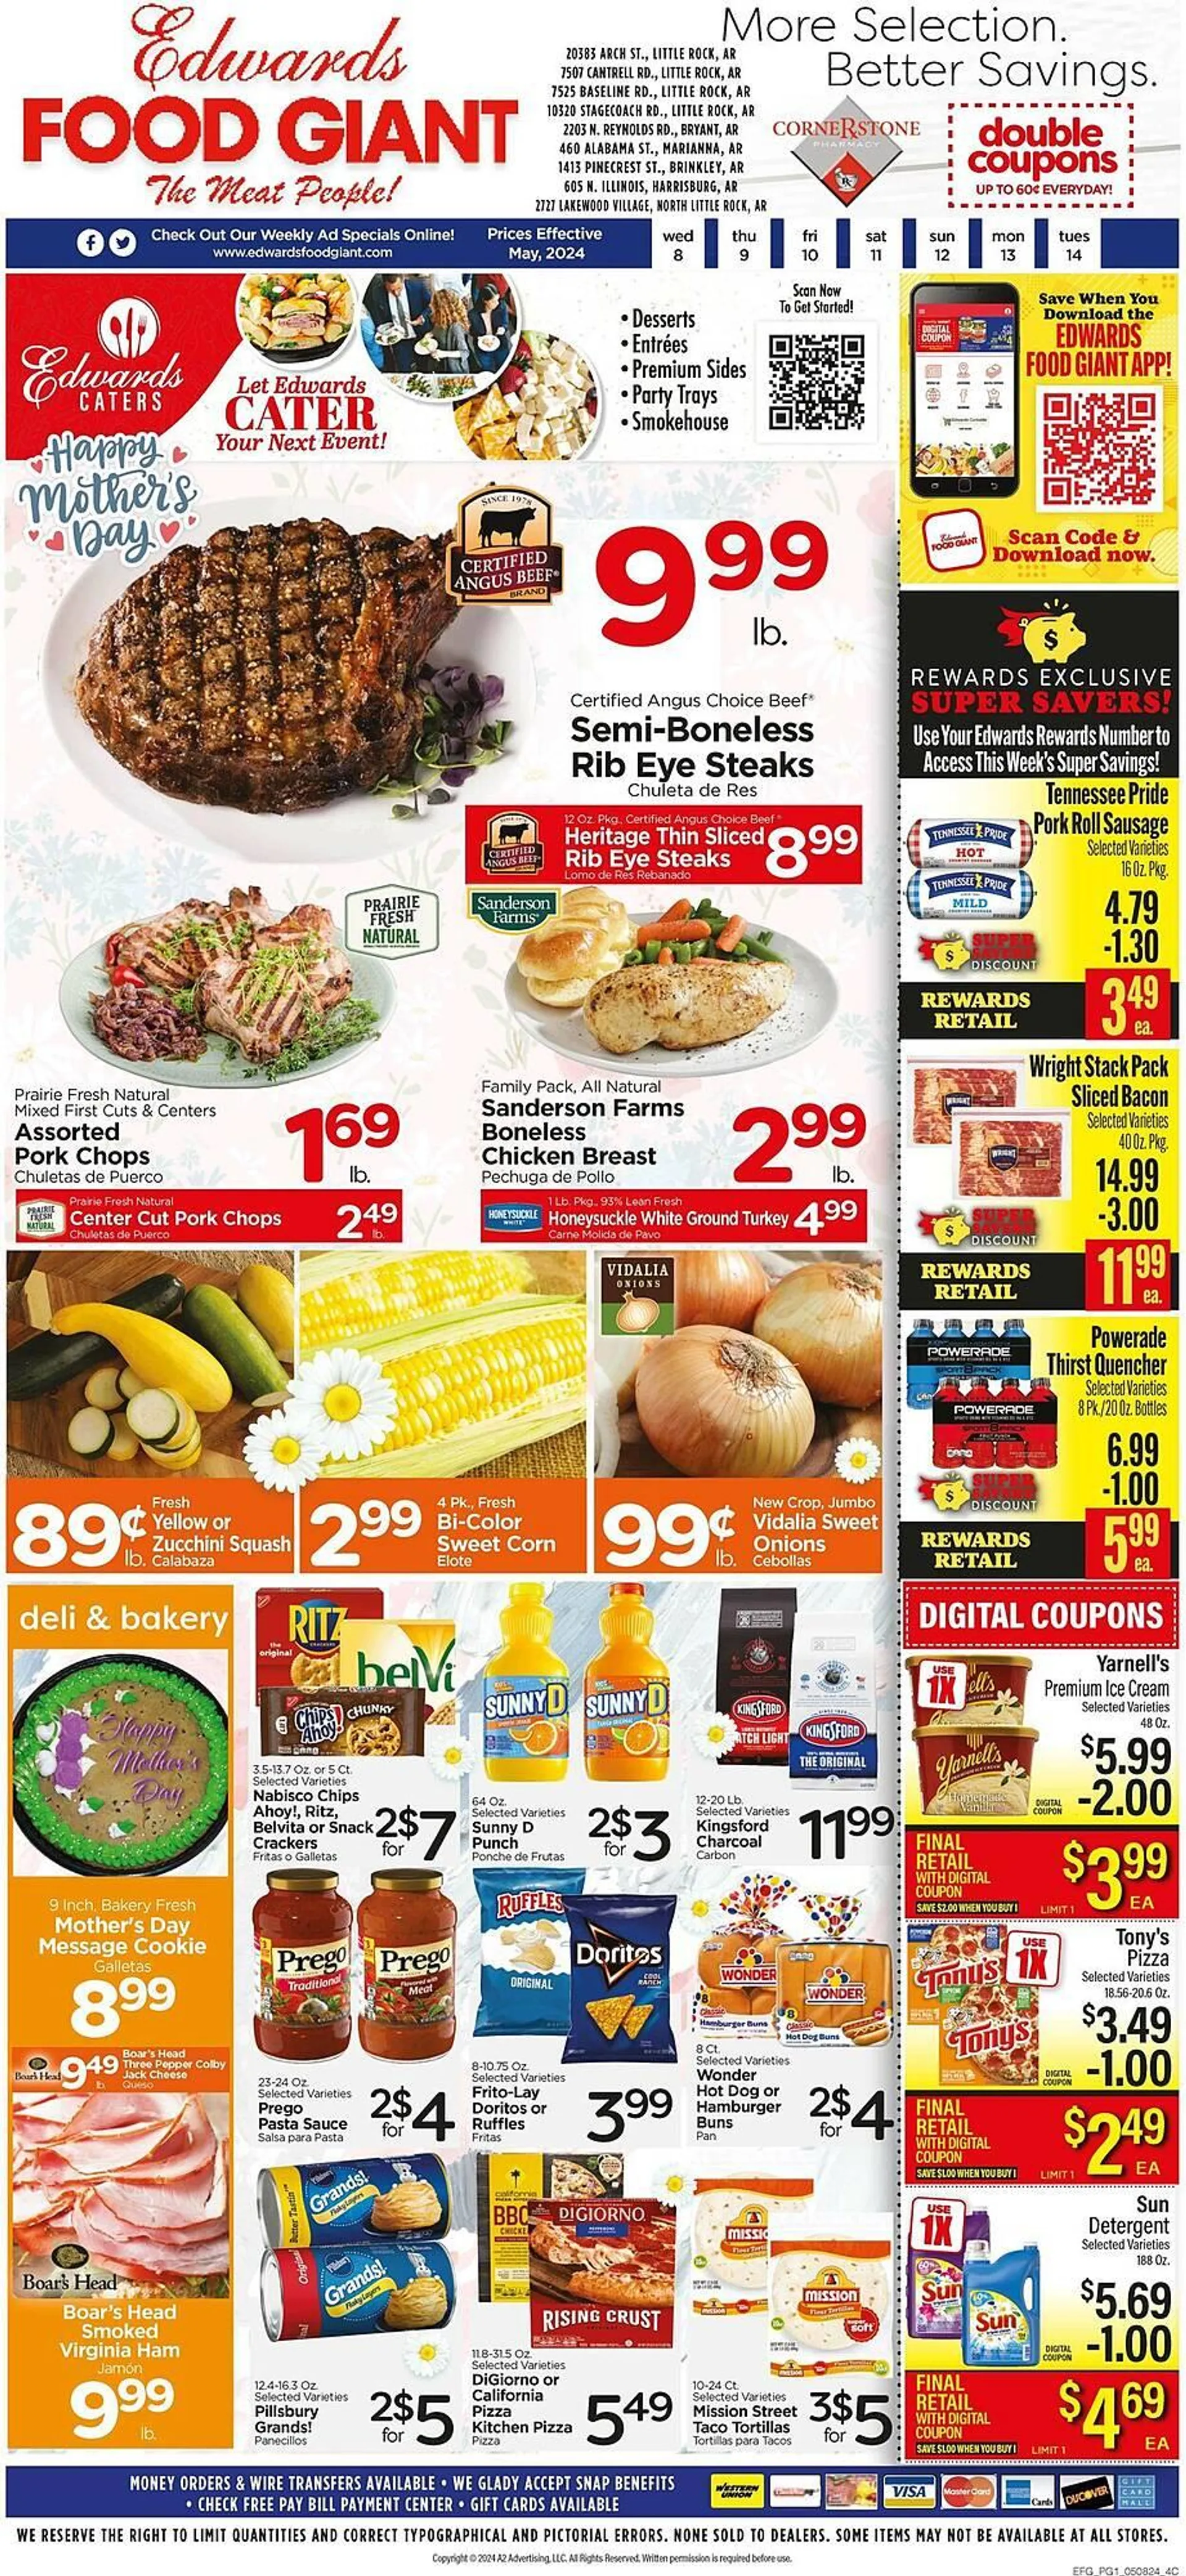 Edwards Food Giant Weekly Ad - 1